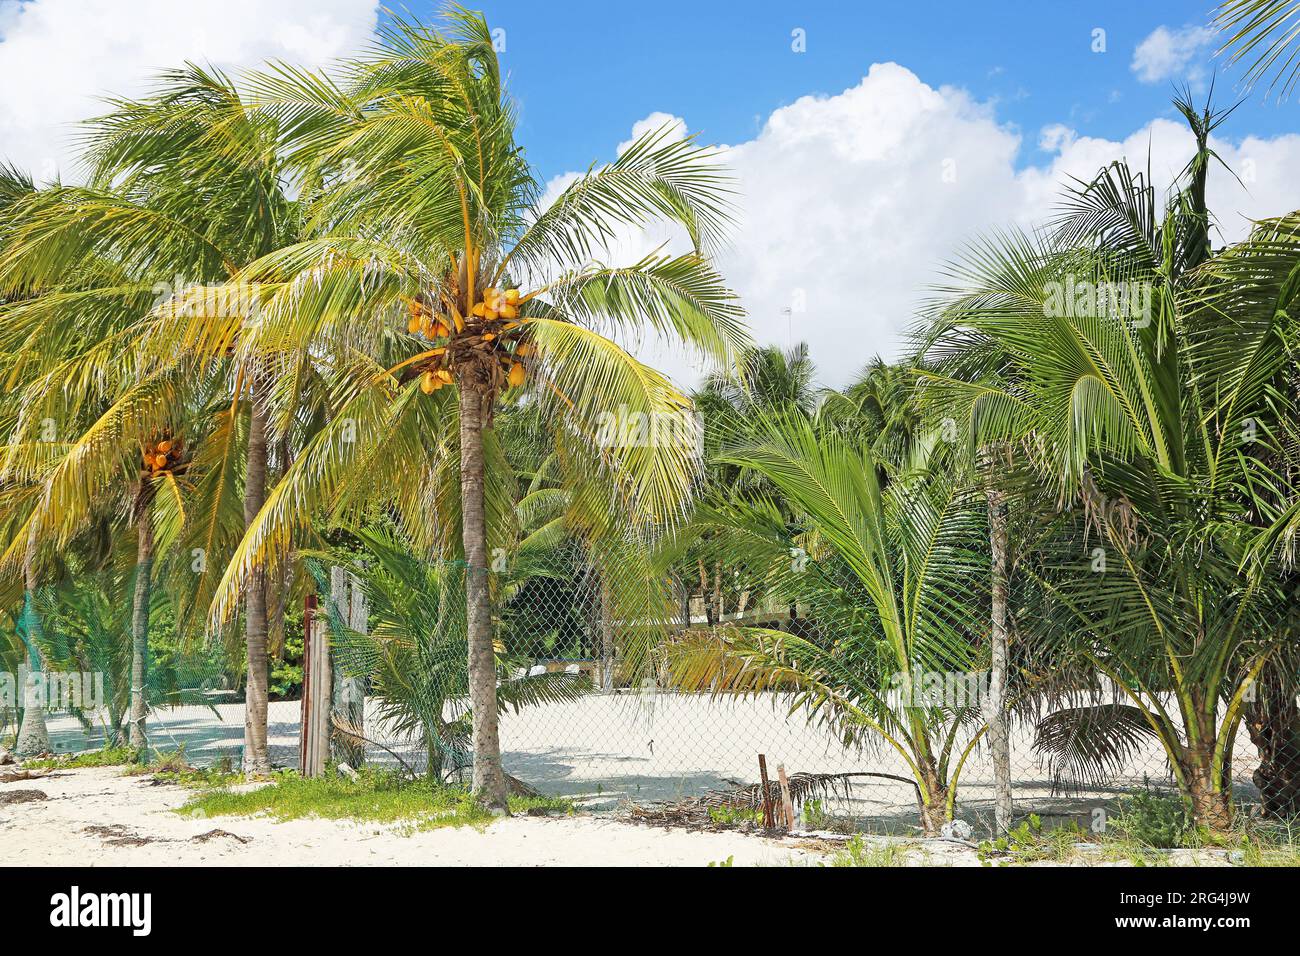 Coconut palm trees, Mexico Stock Photo